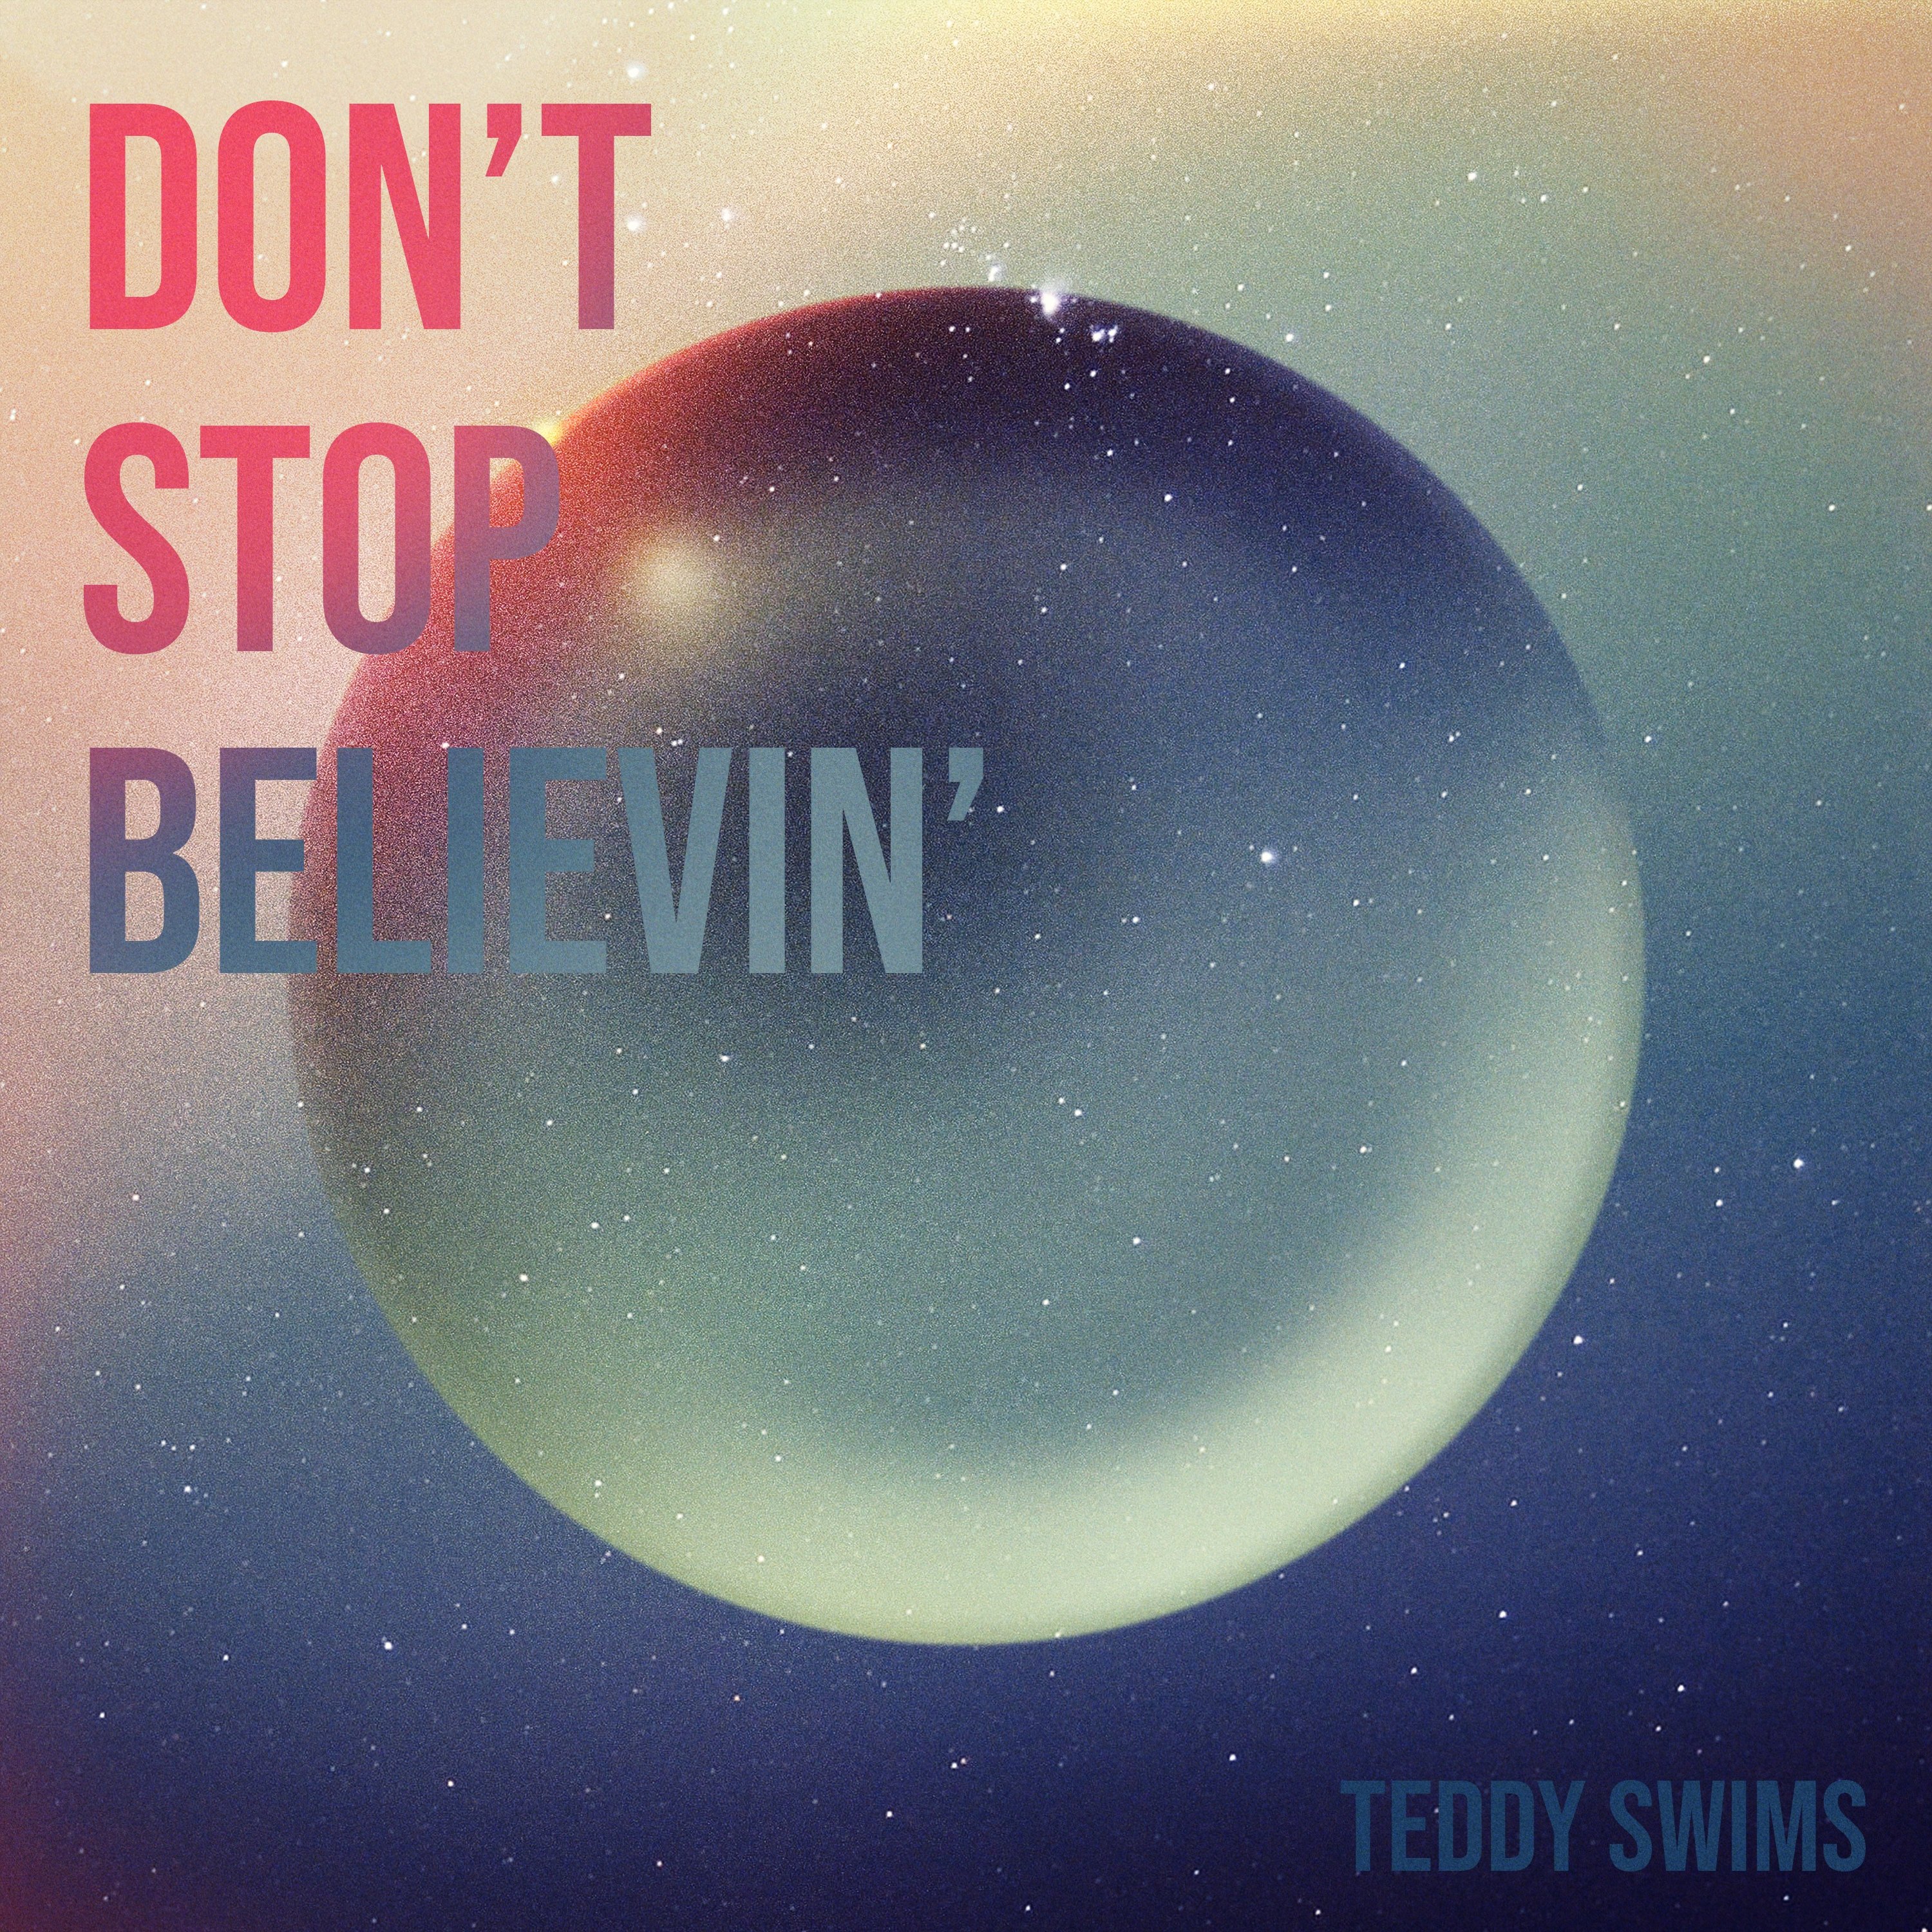 Teddy Swims. "Don't stop Believin'" by Journey:. Teddy Swims 911. Teddy Swims слушать. Teddy swims перевод песни lose